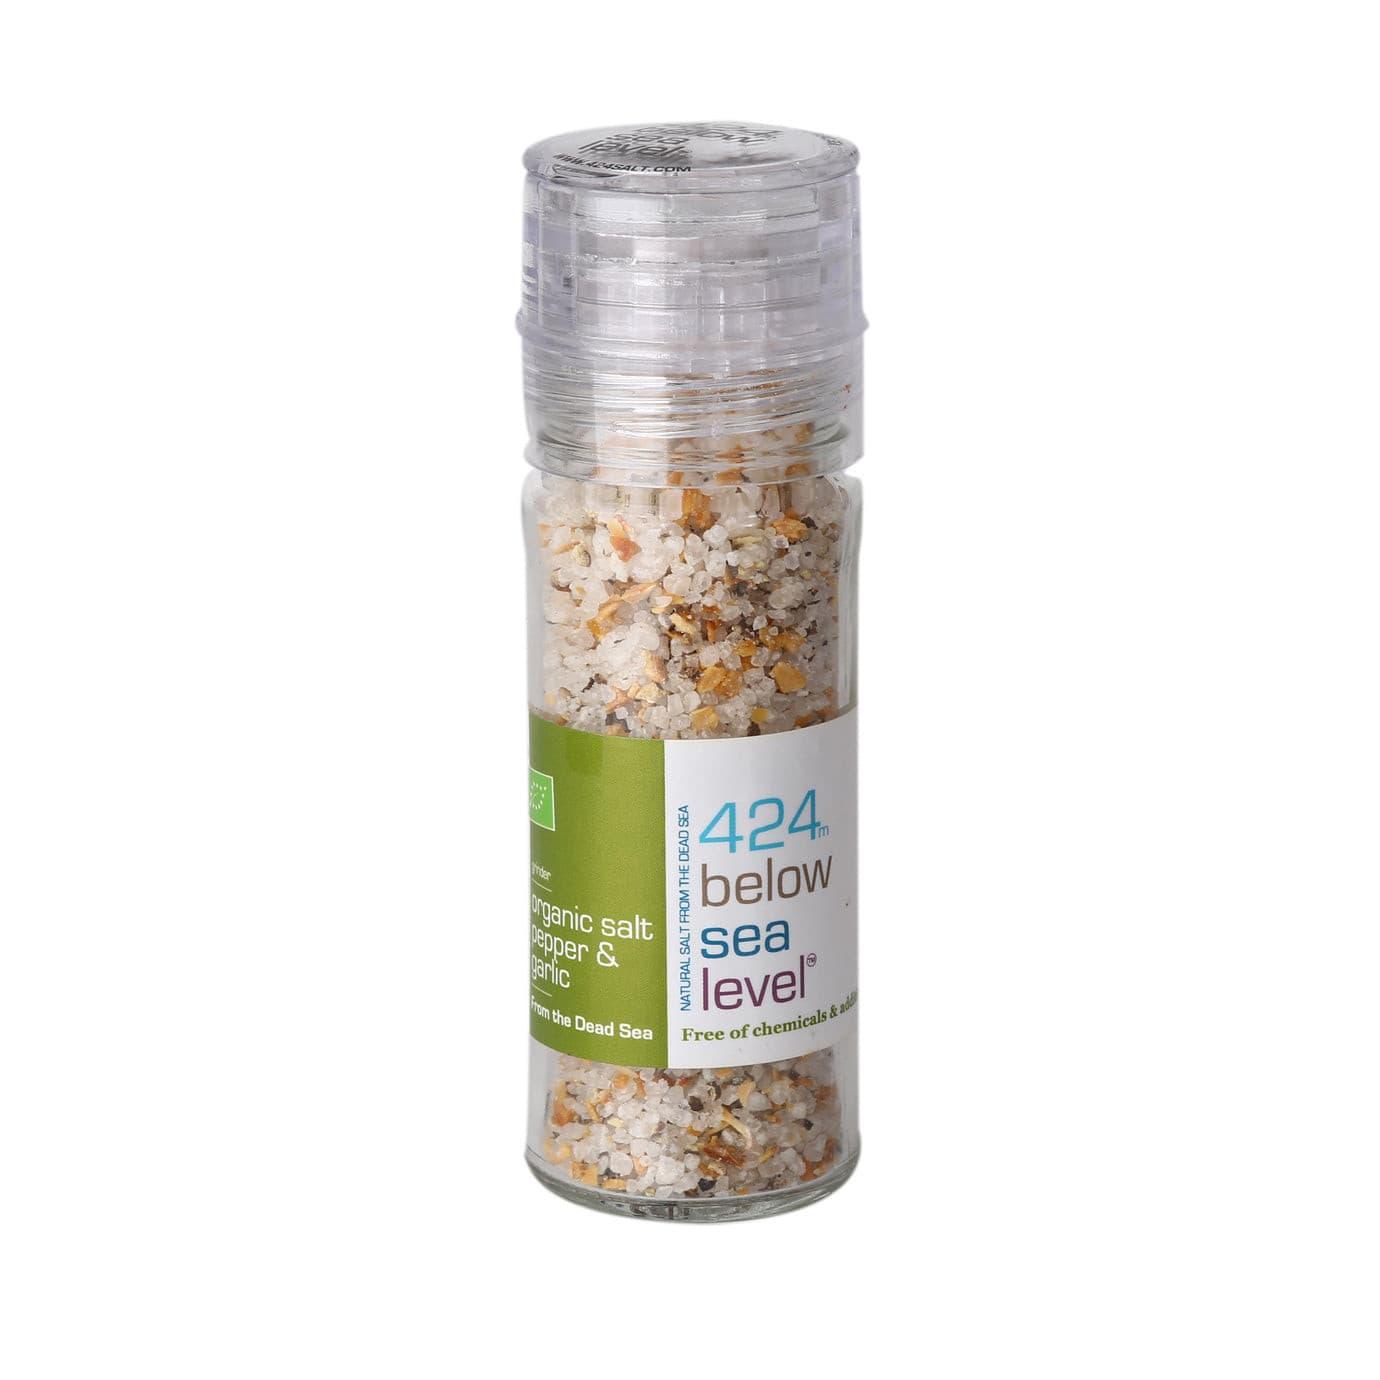 Organic Garlic Pepper Salt Gourmet From The Dead Sea 3.87oz / 110 grams.